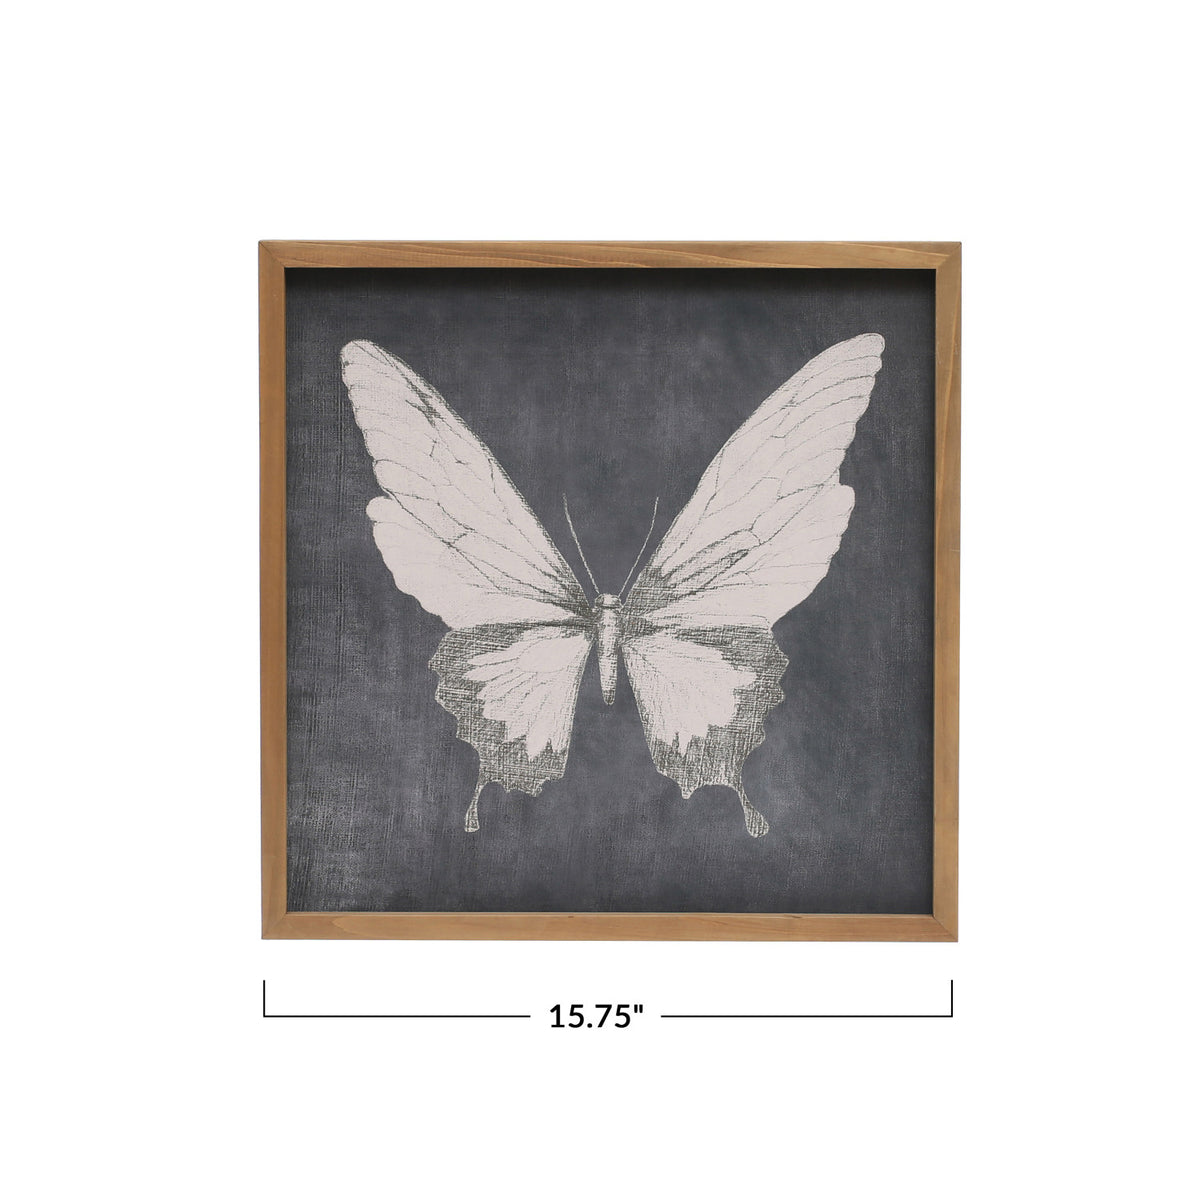 15.75"S Wood Framed Wall Decor w/Butterfly